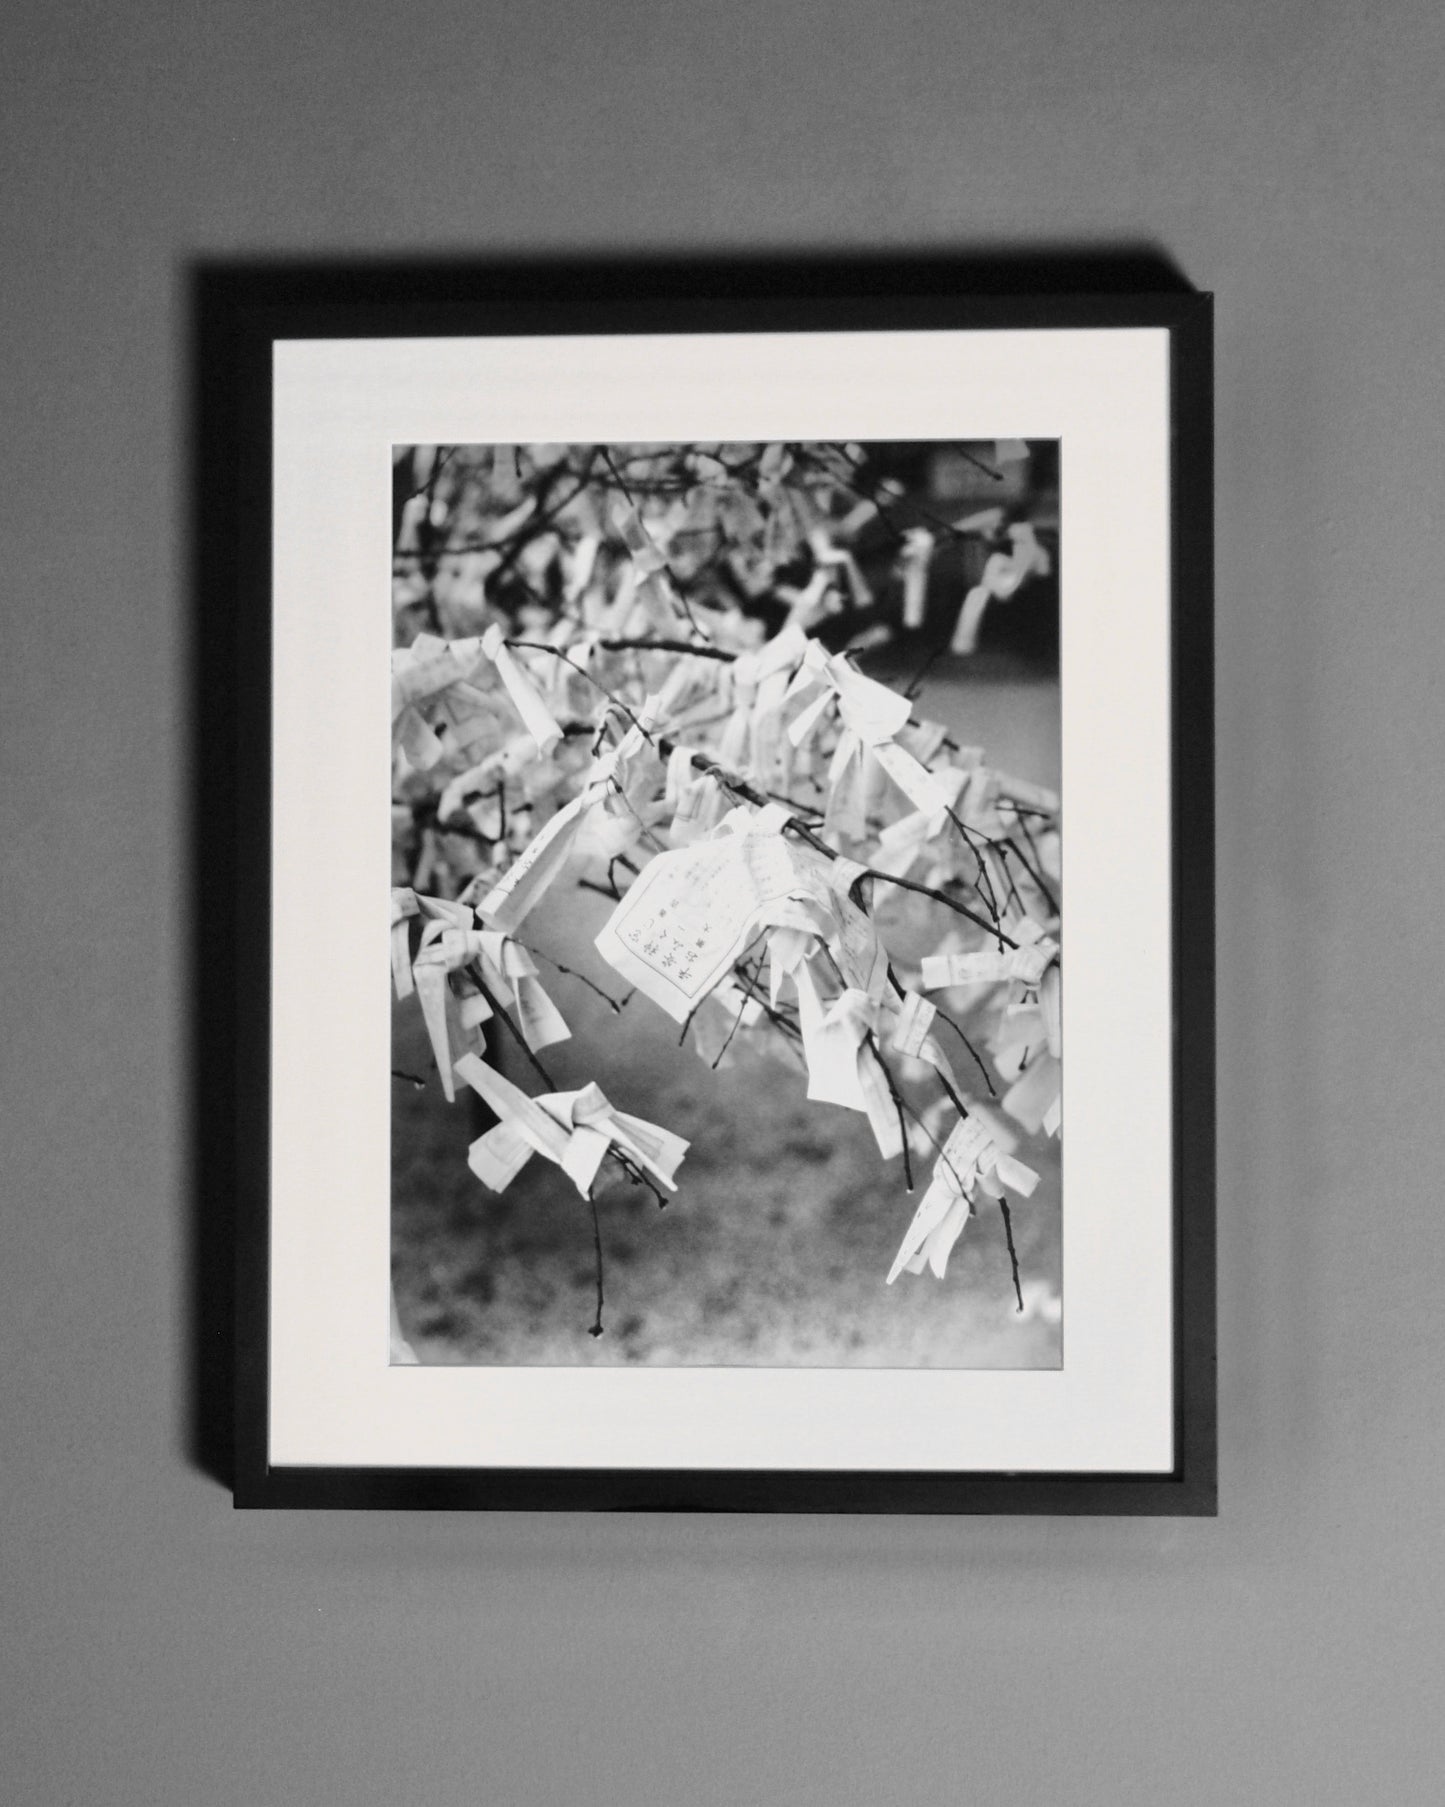 HORST FRIEDRICHS "WISHING TREE" // Framed Print